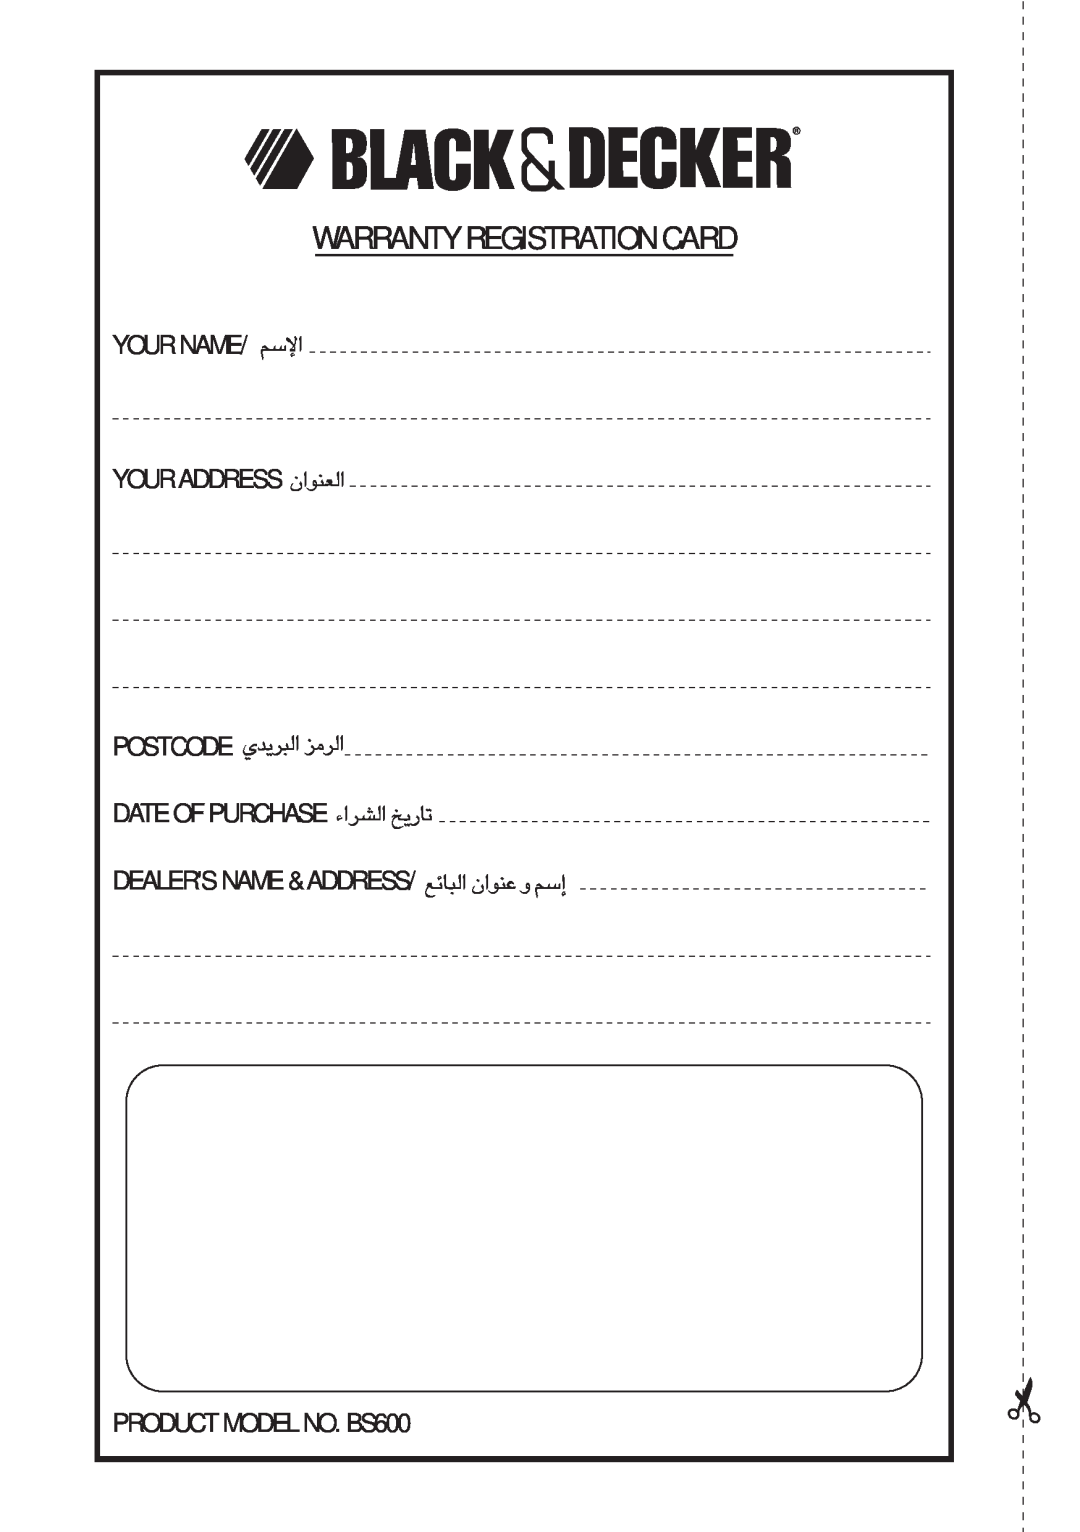 Black & Decker manual Warranty Registration Card, «ùßr, FMu«Ê∞«, d¥bÍ∞∂« d±e∞«, Ad«¡∞« ¢U¸¥a, PRODUCT MODEL NO. BS600 